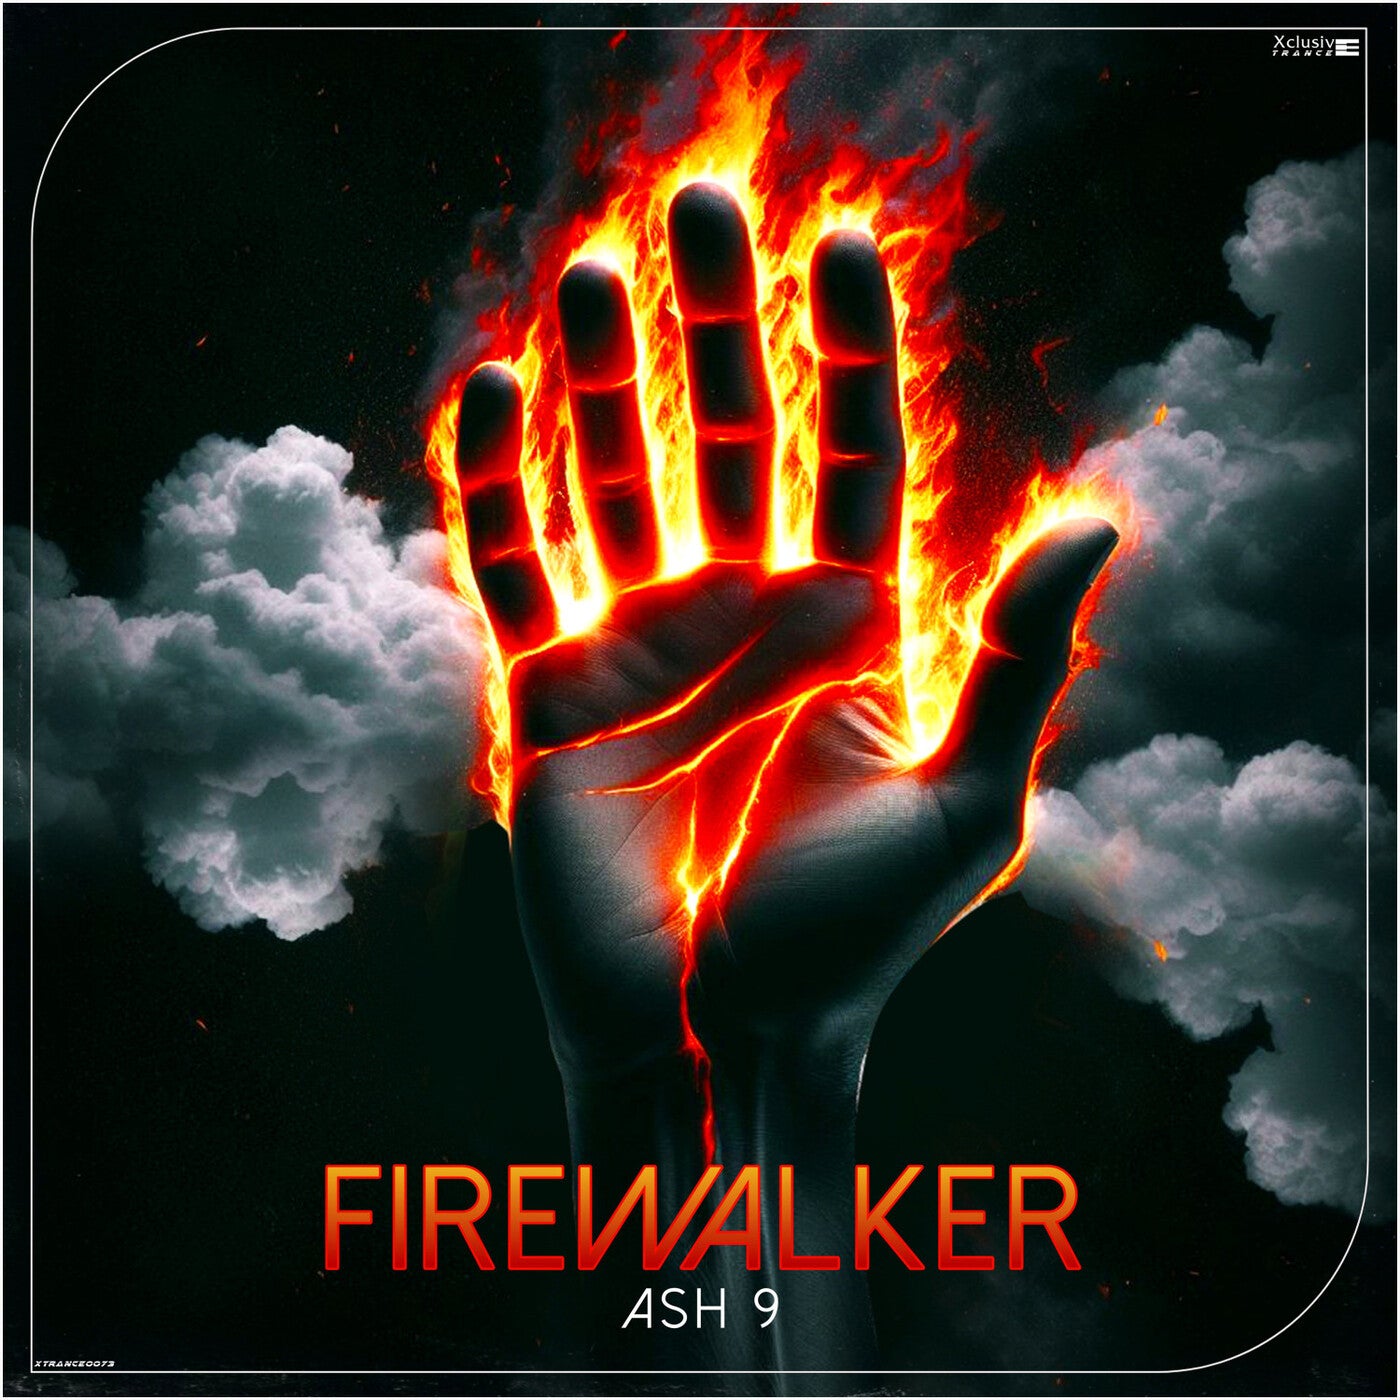 Firewalker